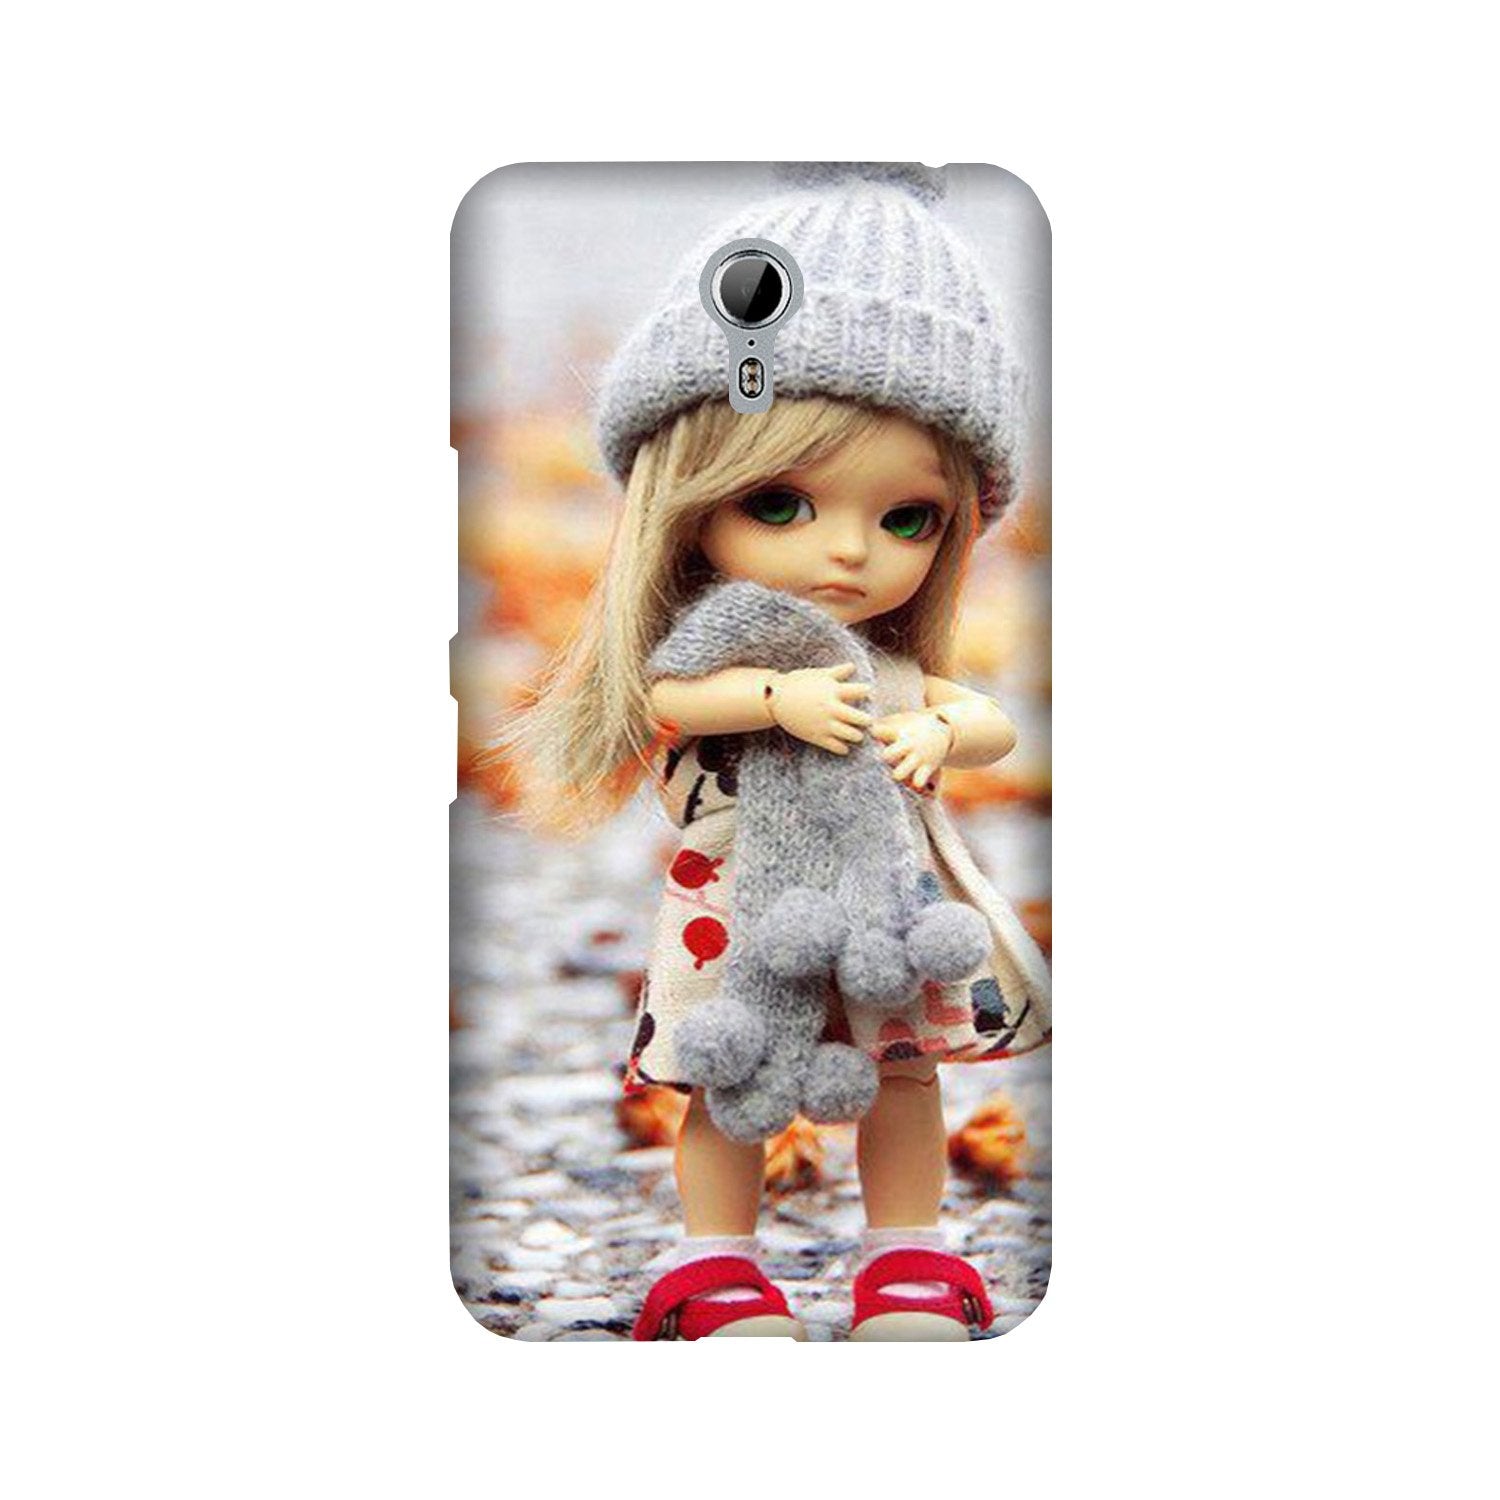 Cute Doll Case for Lenovo Zuk Z1